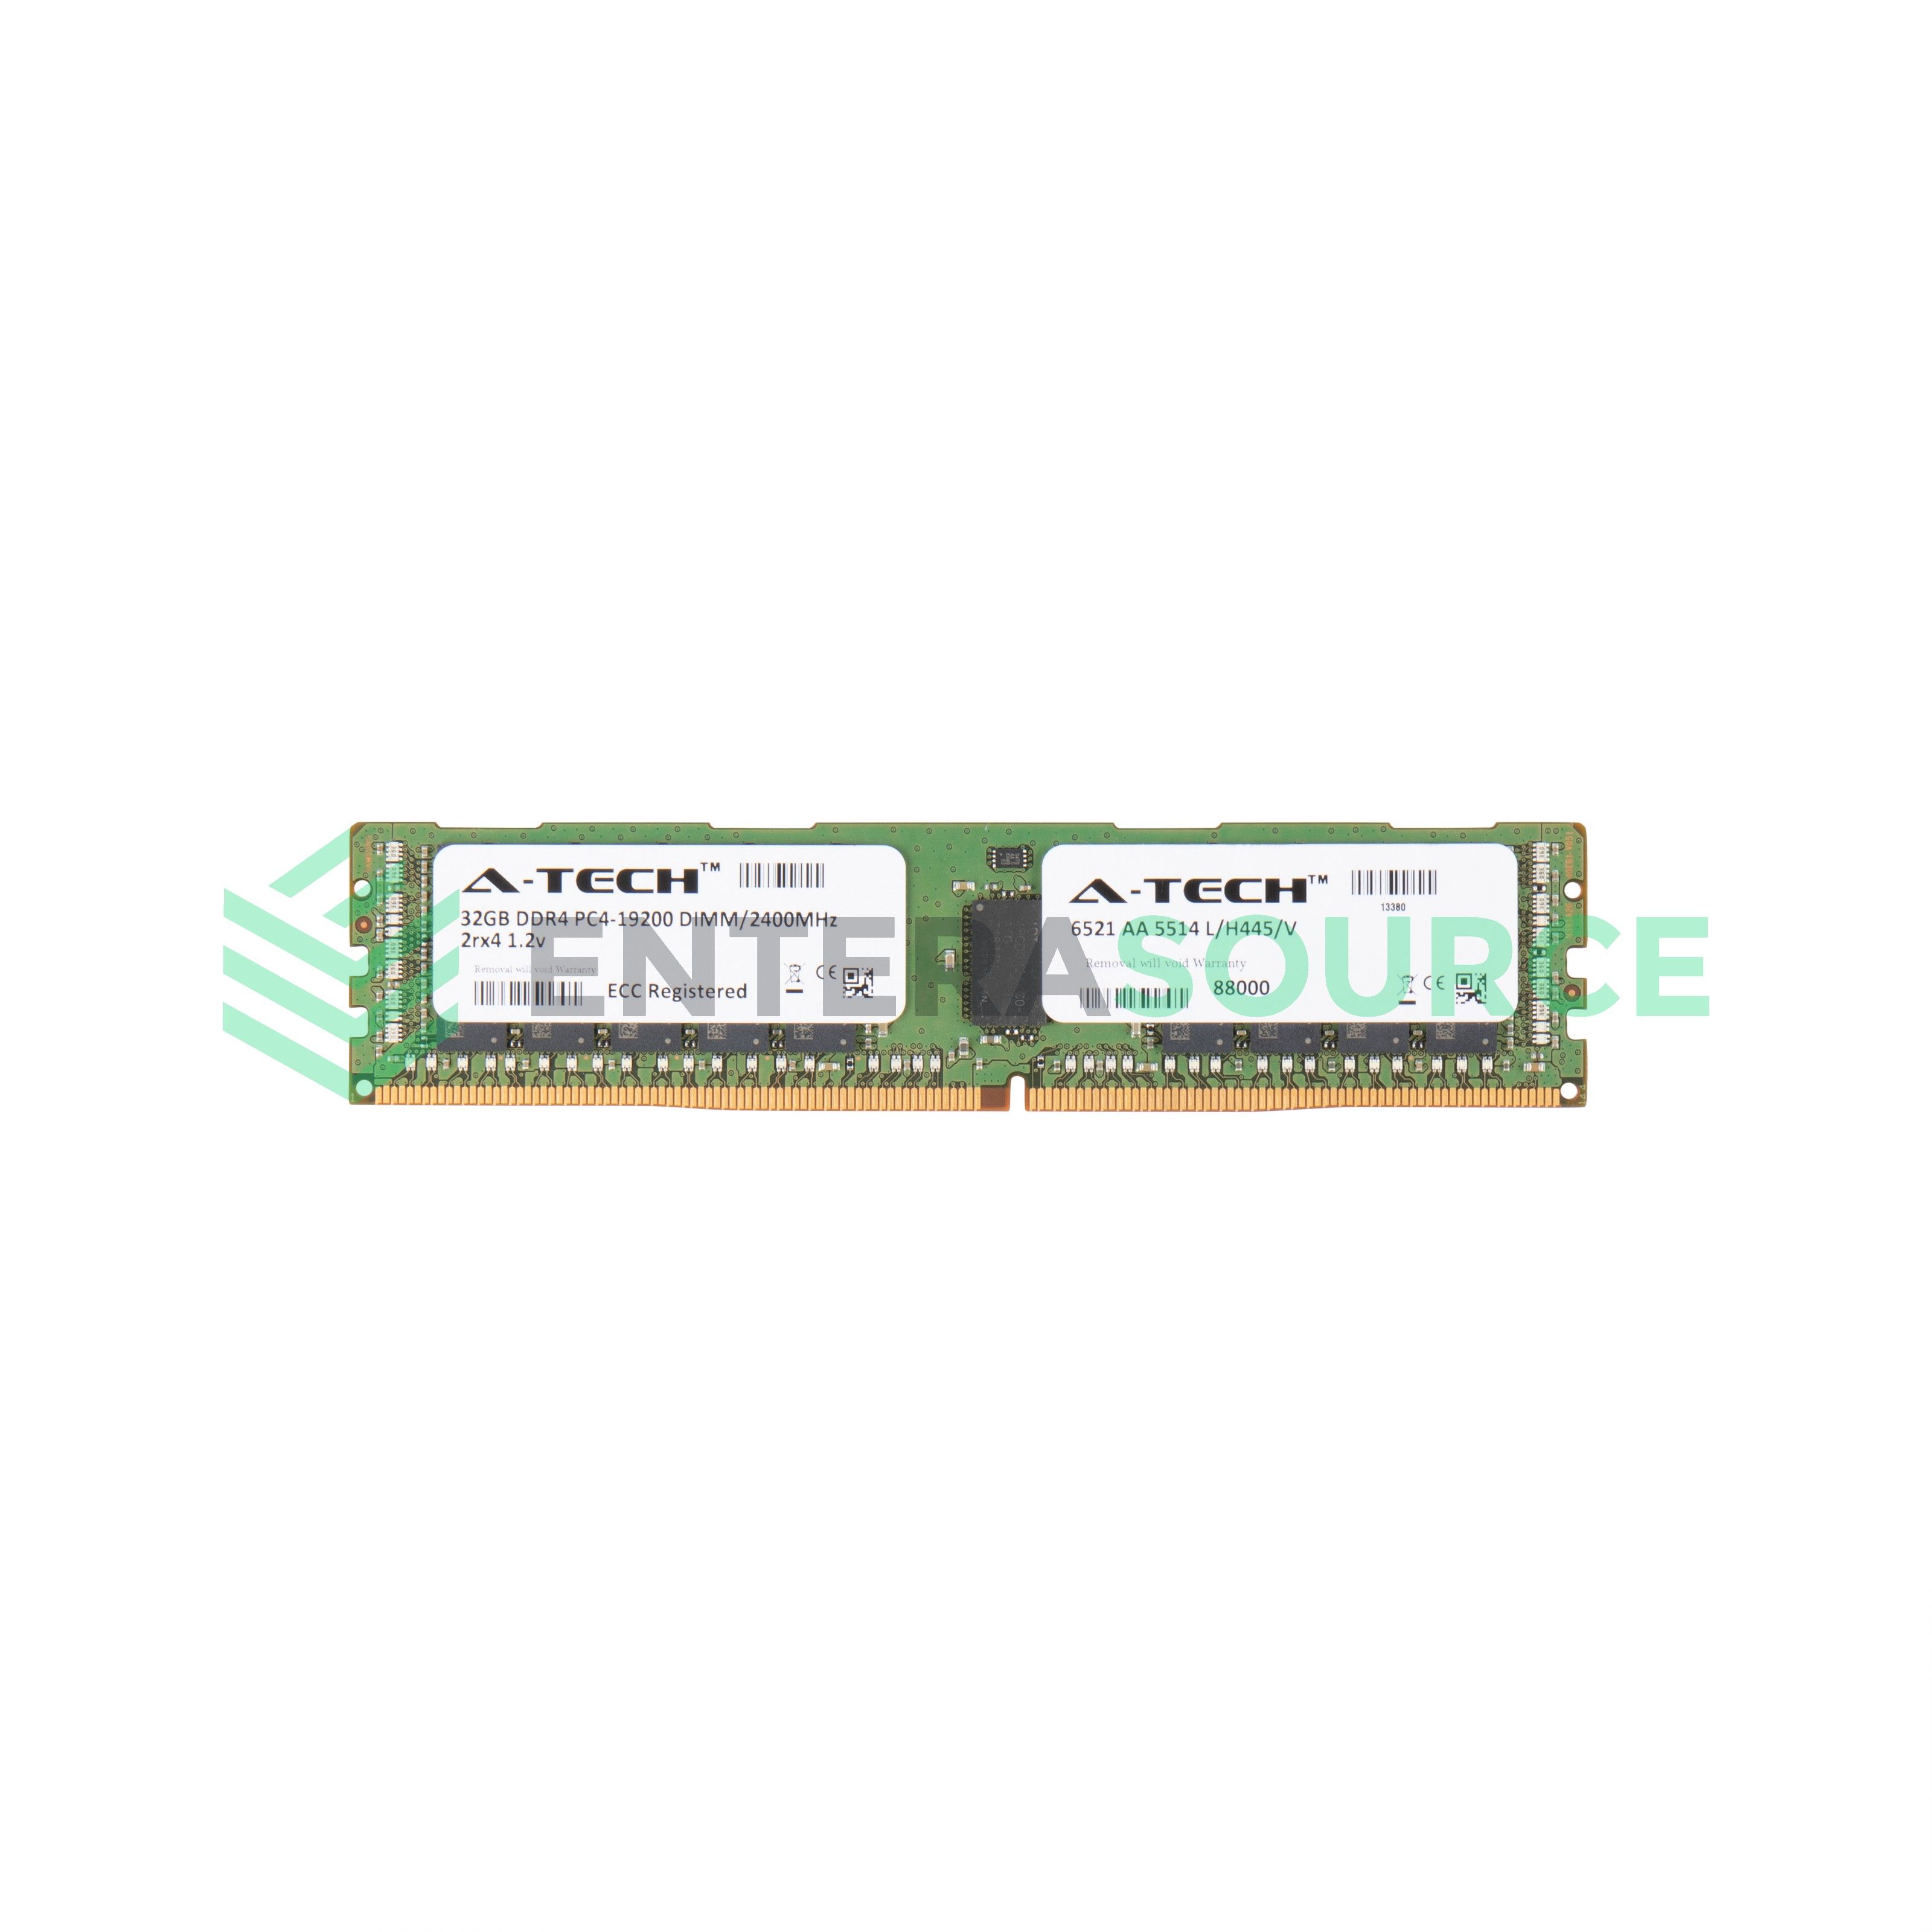 A-Tech 6521 AA 5514 L/H445/V 32GB DDR4-2400 (PC4-19200) DIMM